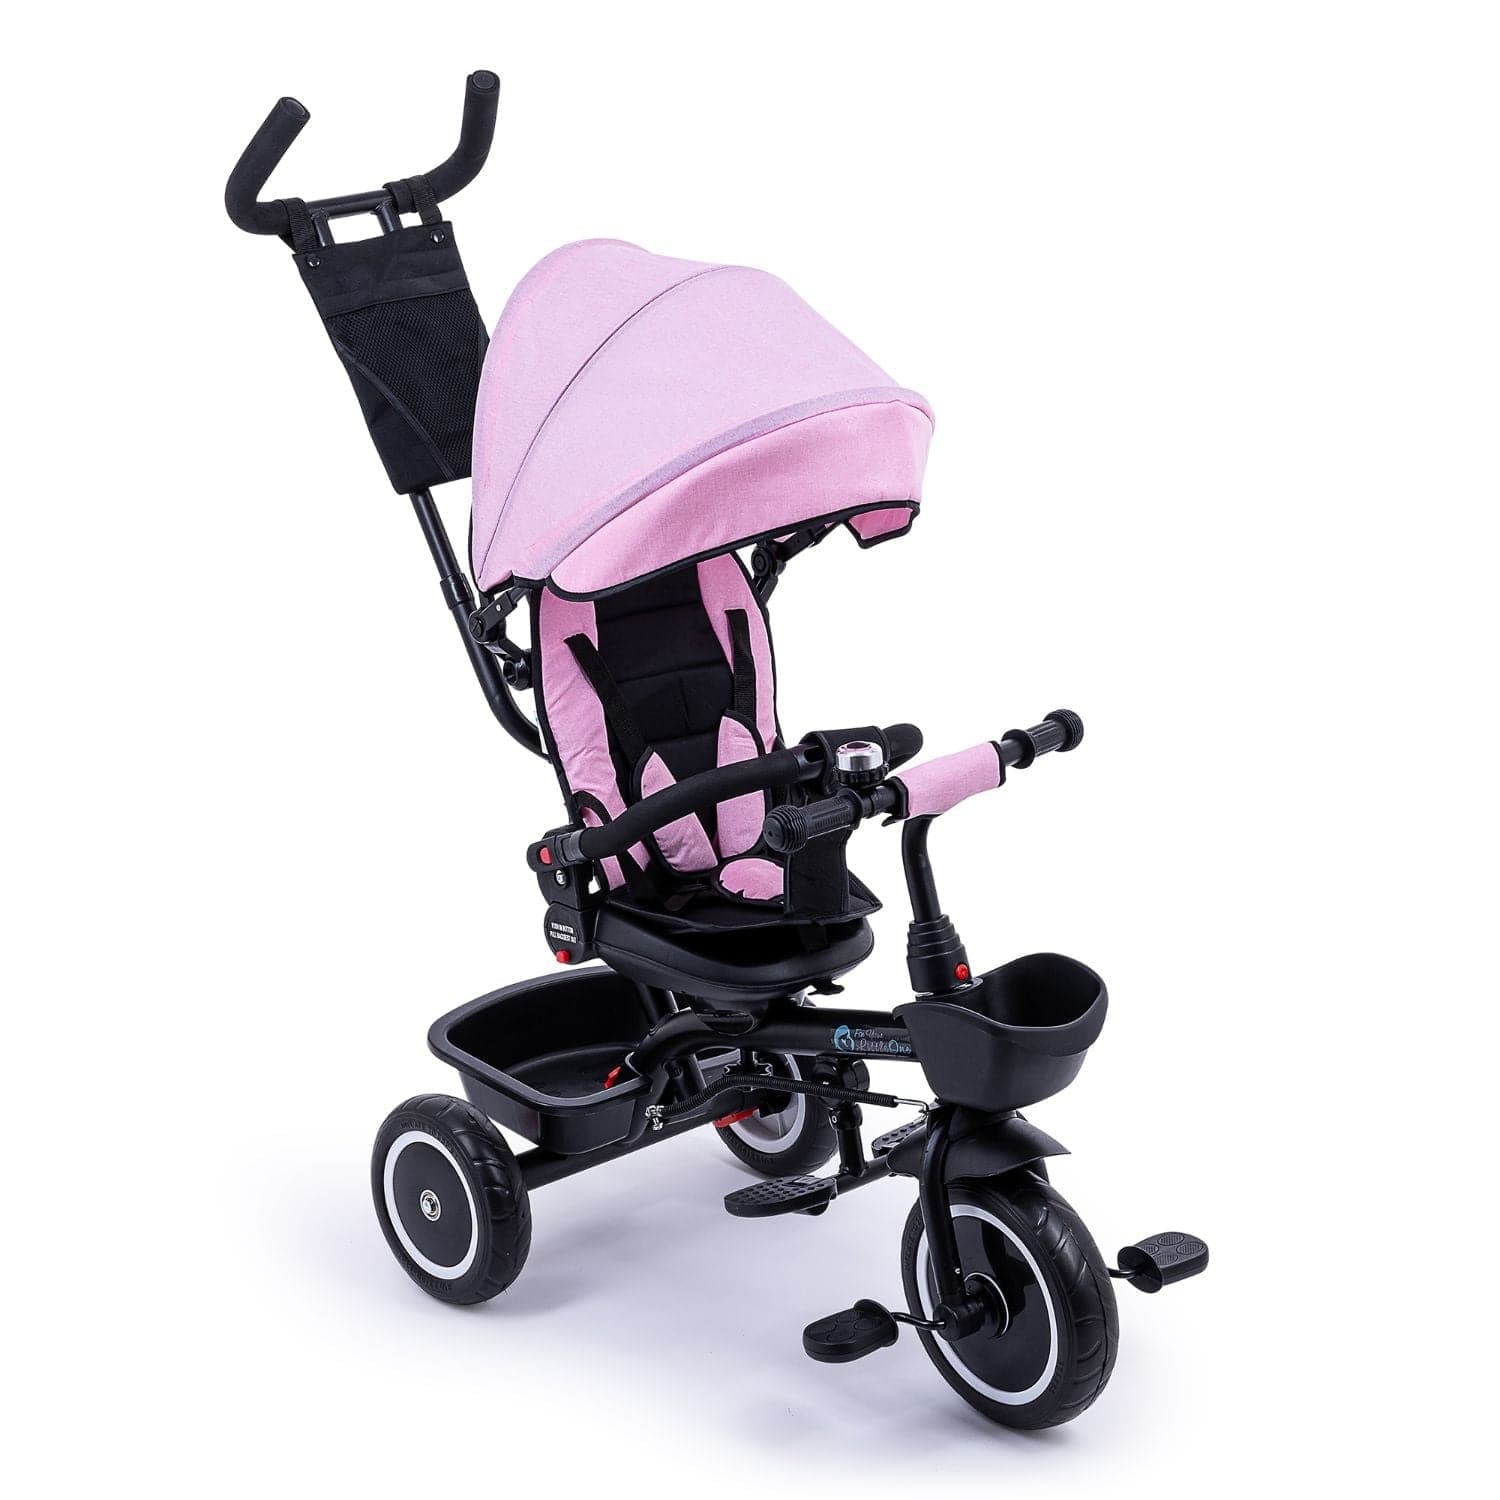 Review] Best Affordable & Sturdy Trike - Kinderkraft